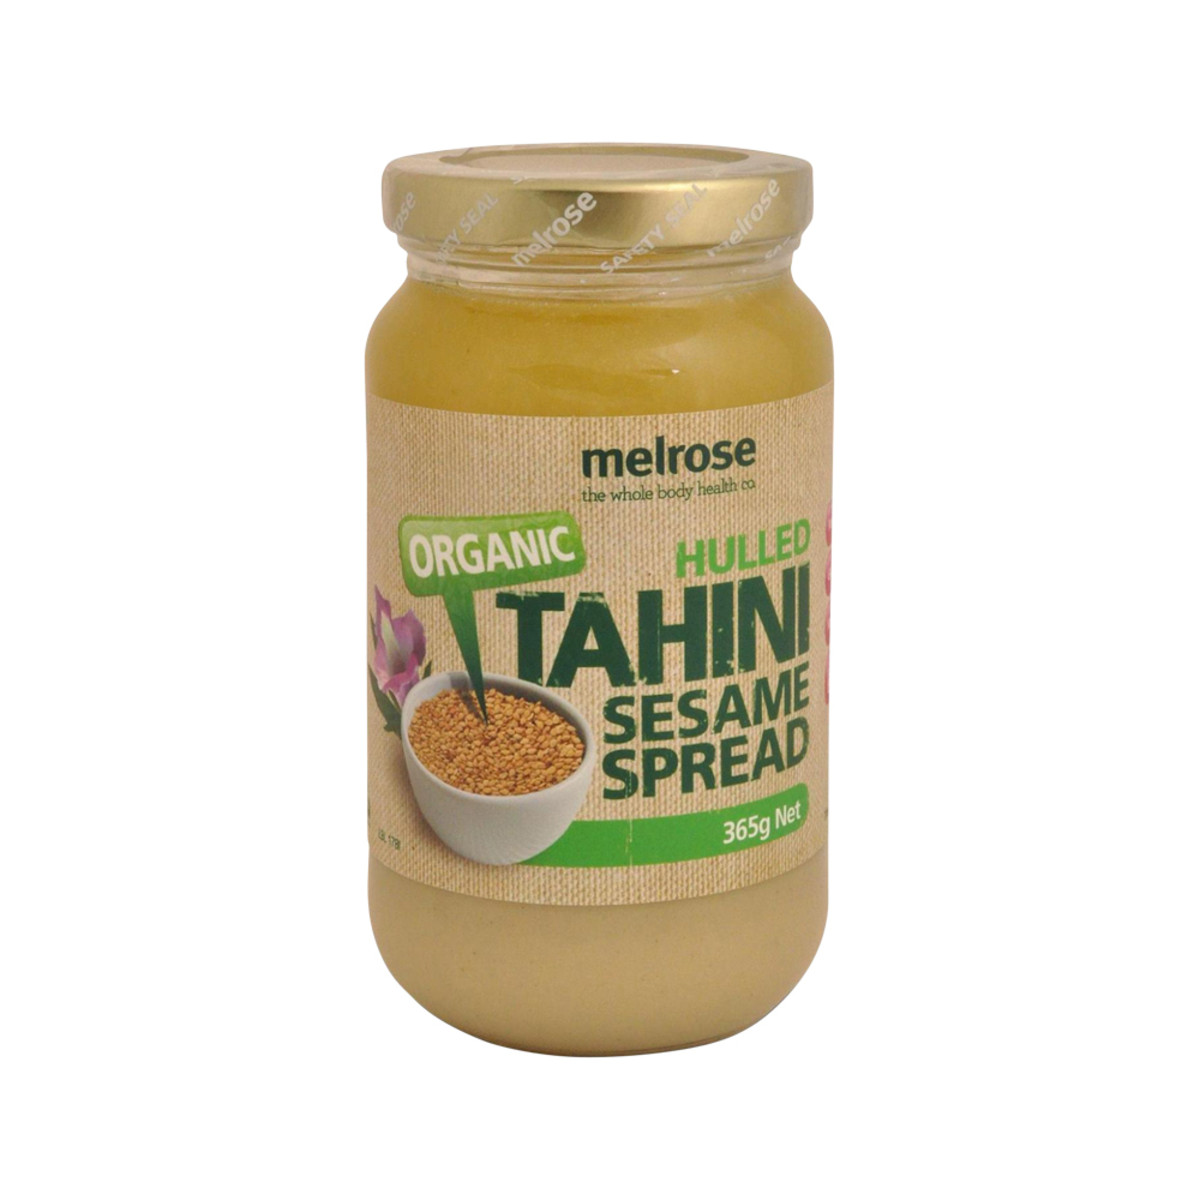 MELROSE - Organic Tahini Sesame Spread Hulled